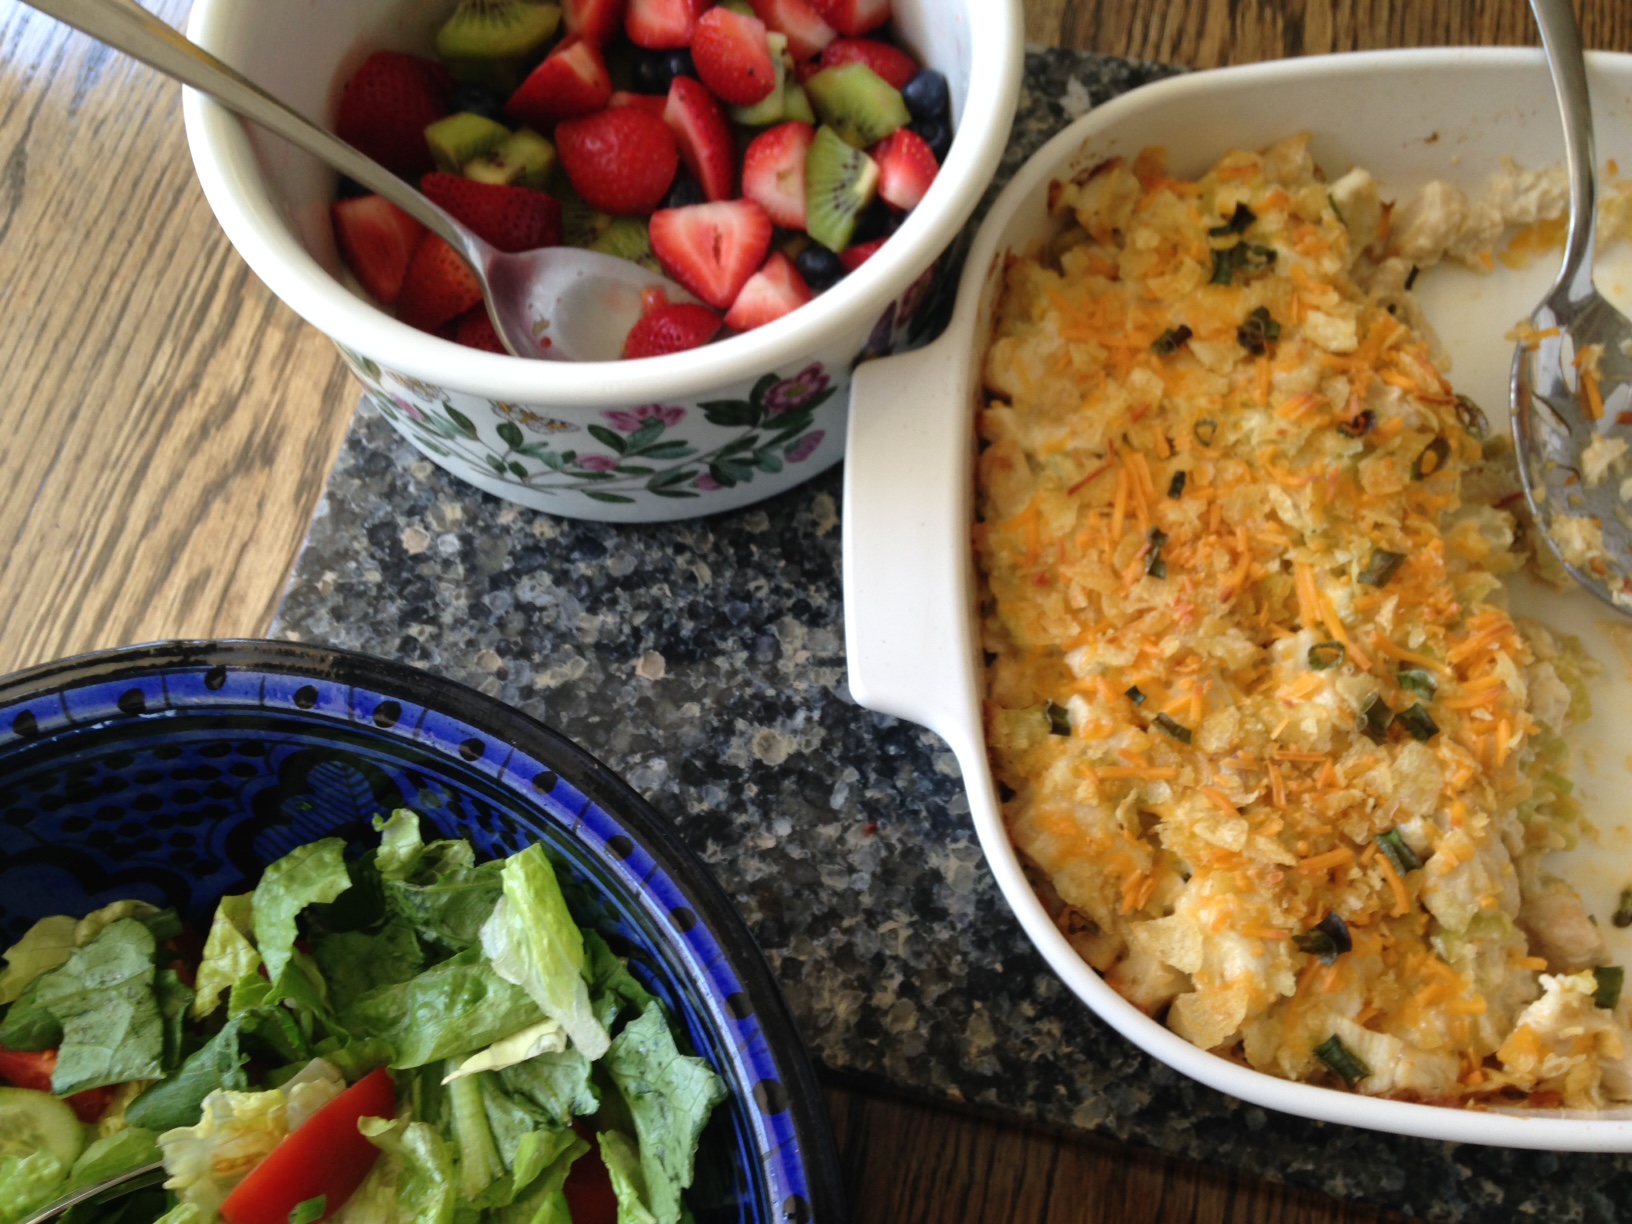 Blog - Summer Lunch - Fresh Fruit, Blueberries, Salad, Hot Chicken Salad - Becky